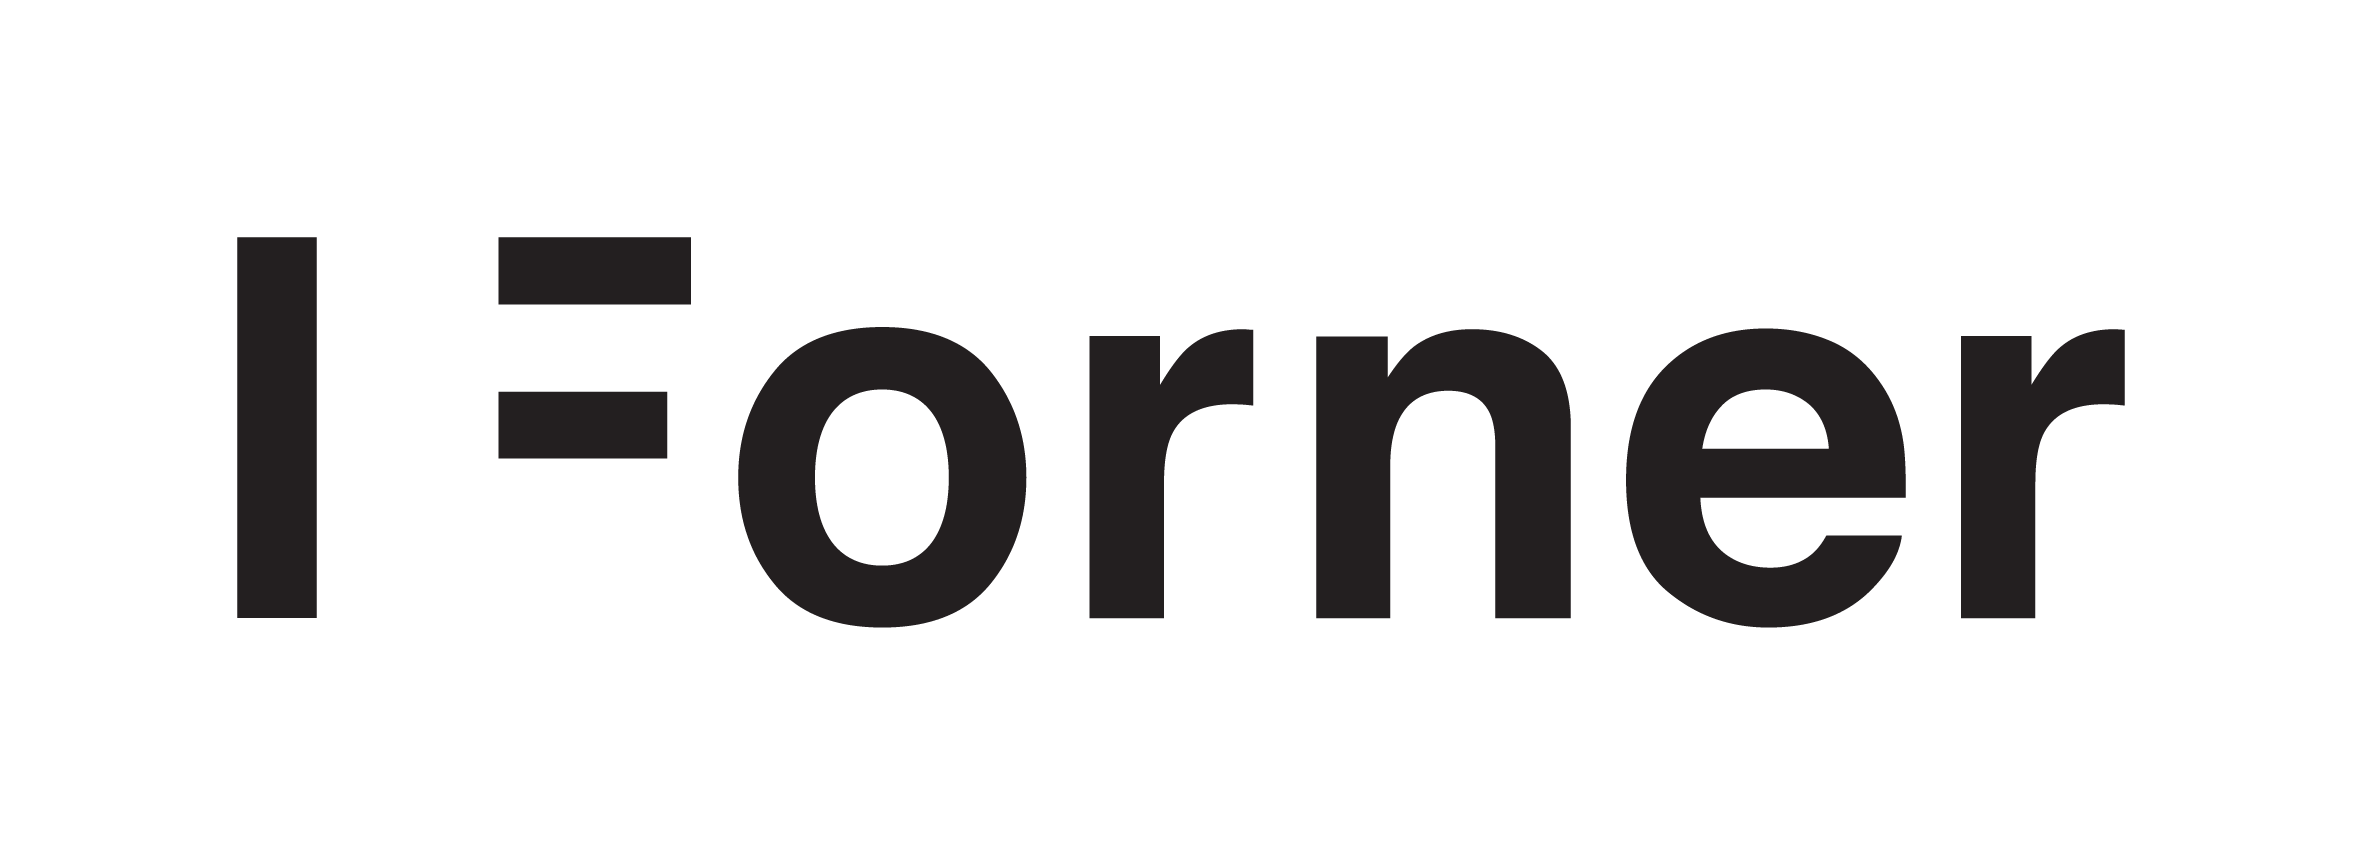 Forner logo